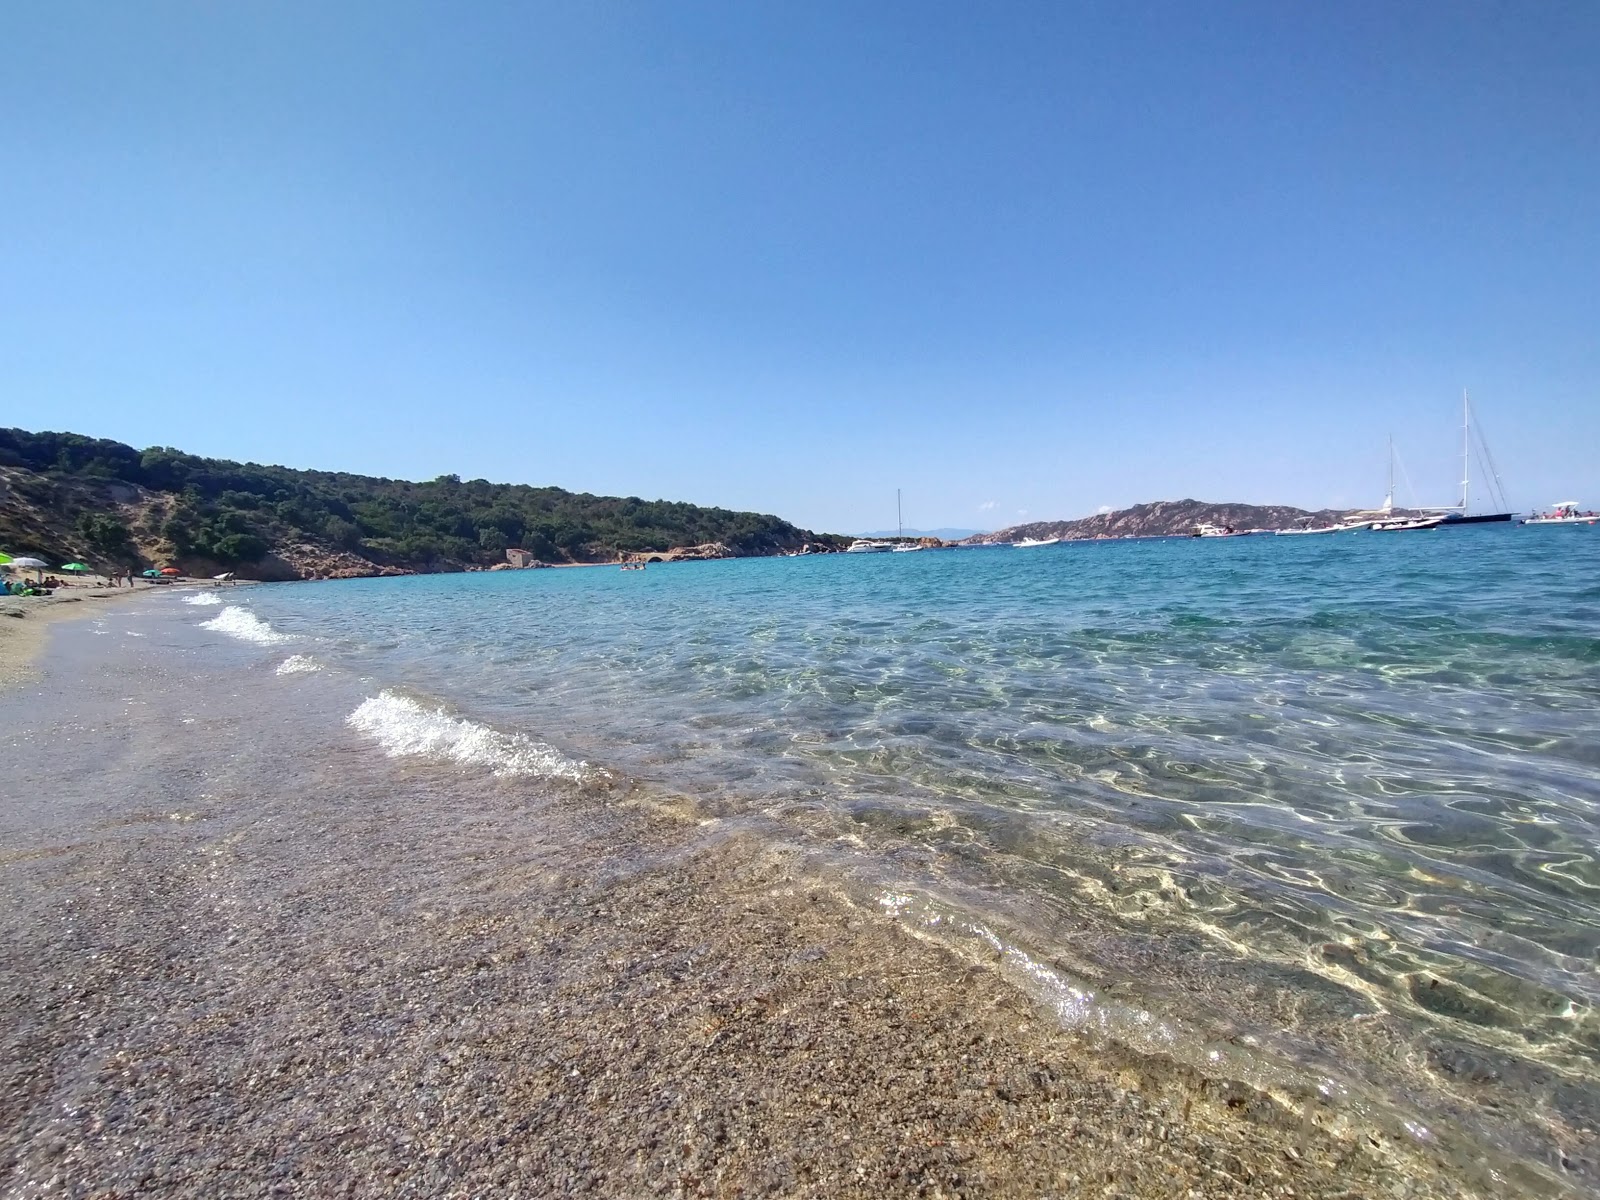 Foto von Spiaggia di Cala di Trana mit türkisfarbenes wasser Oberfläche